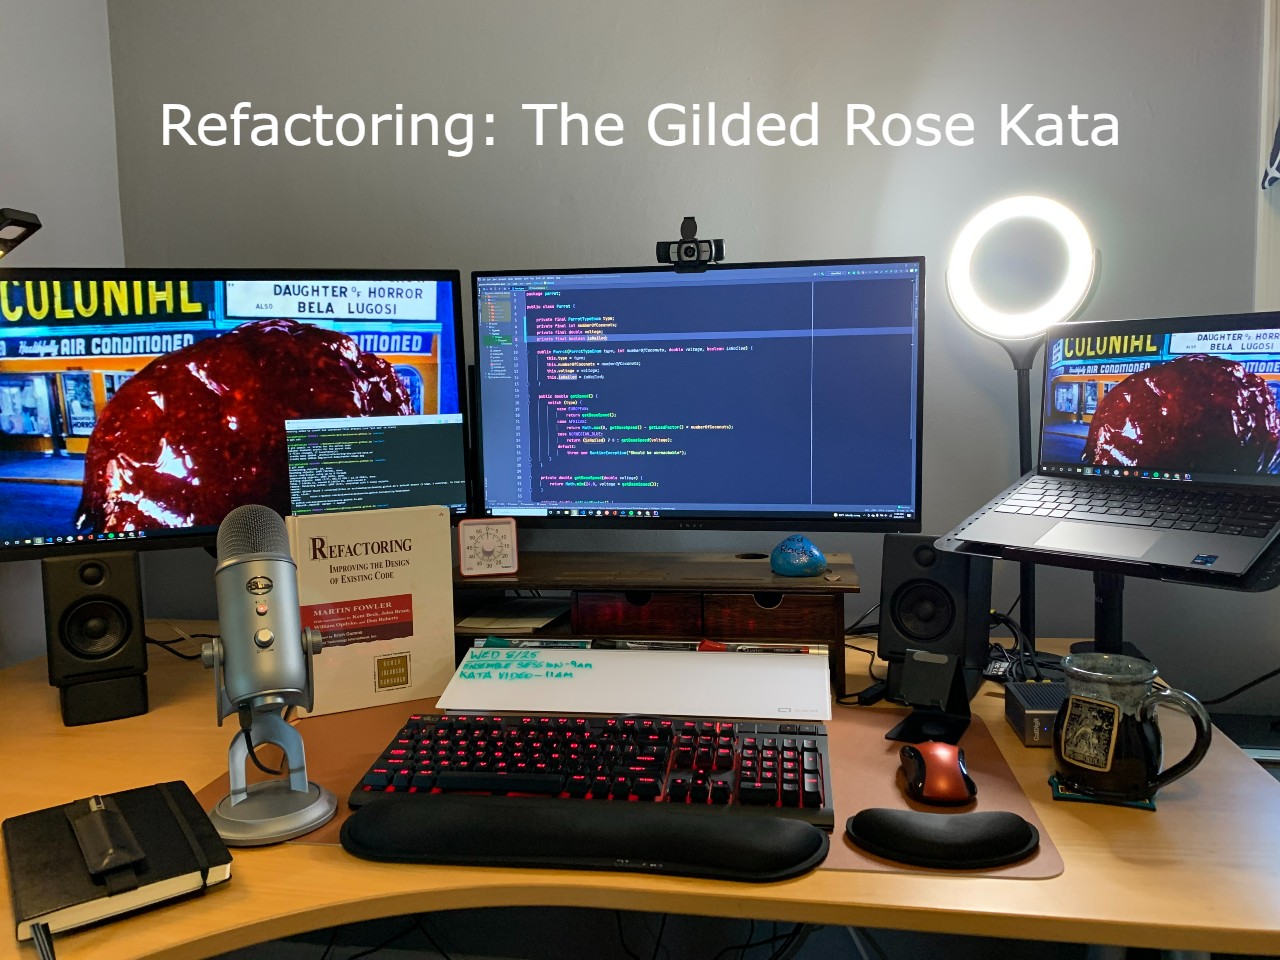 The Gilded Rose Kata